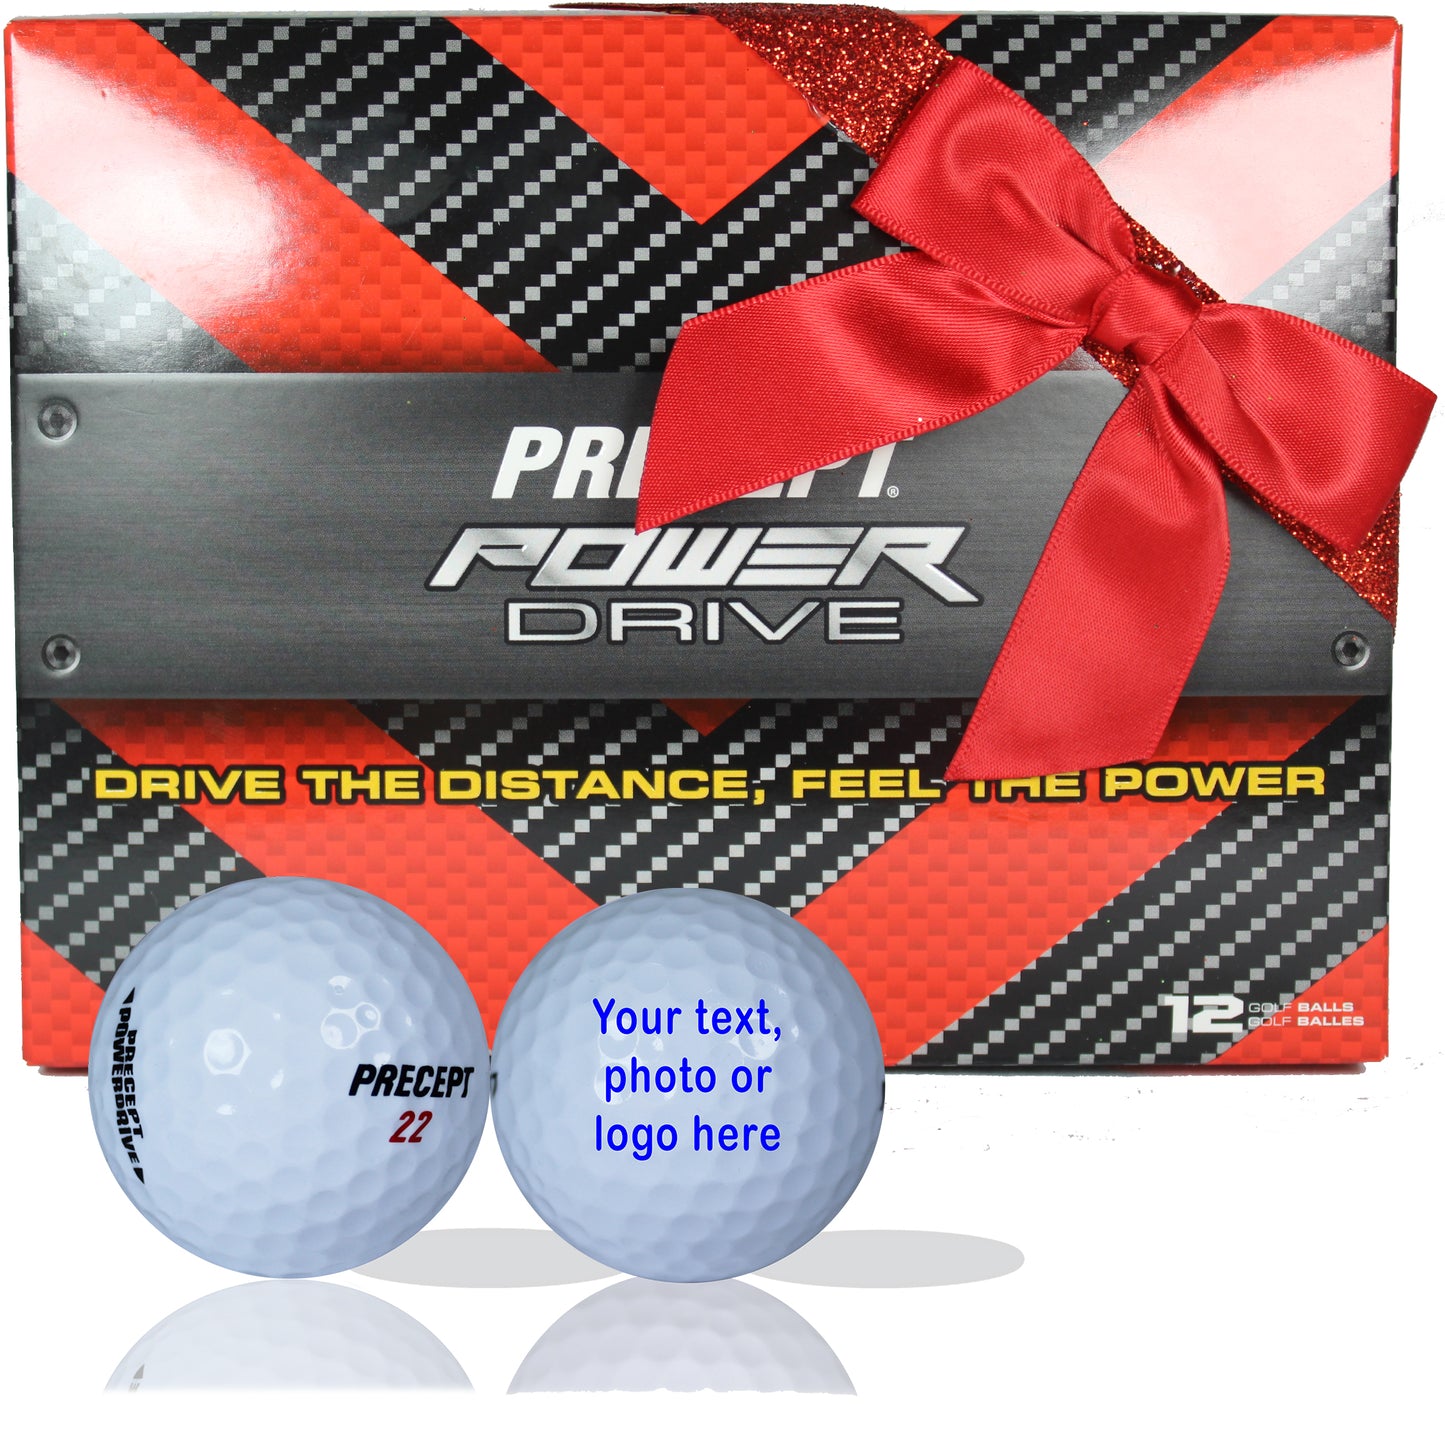 New Precept Power Drive Customized Golf Balls